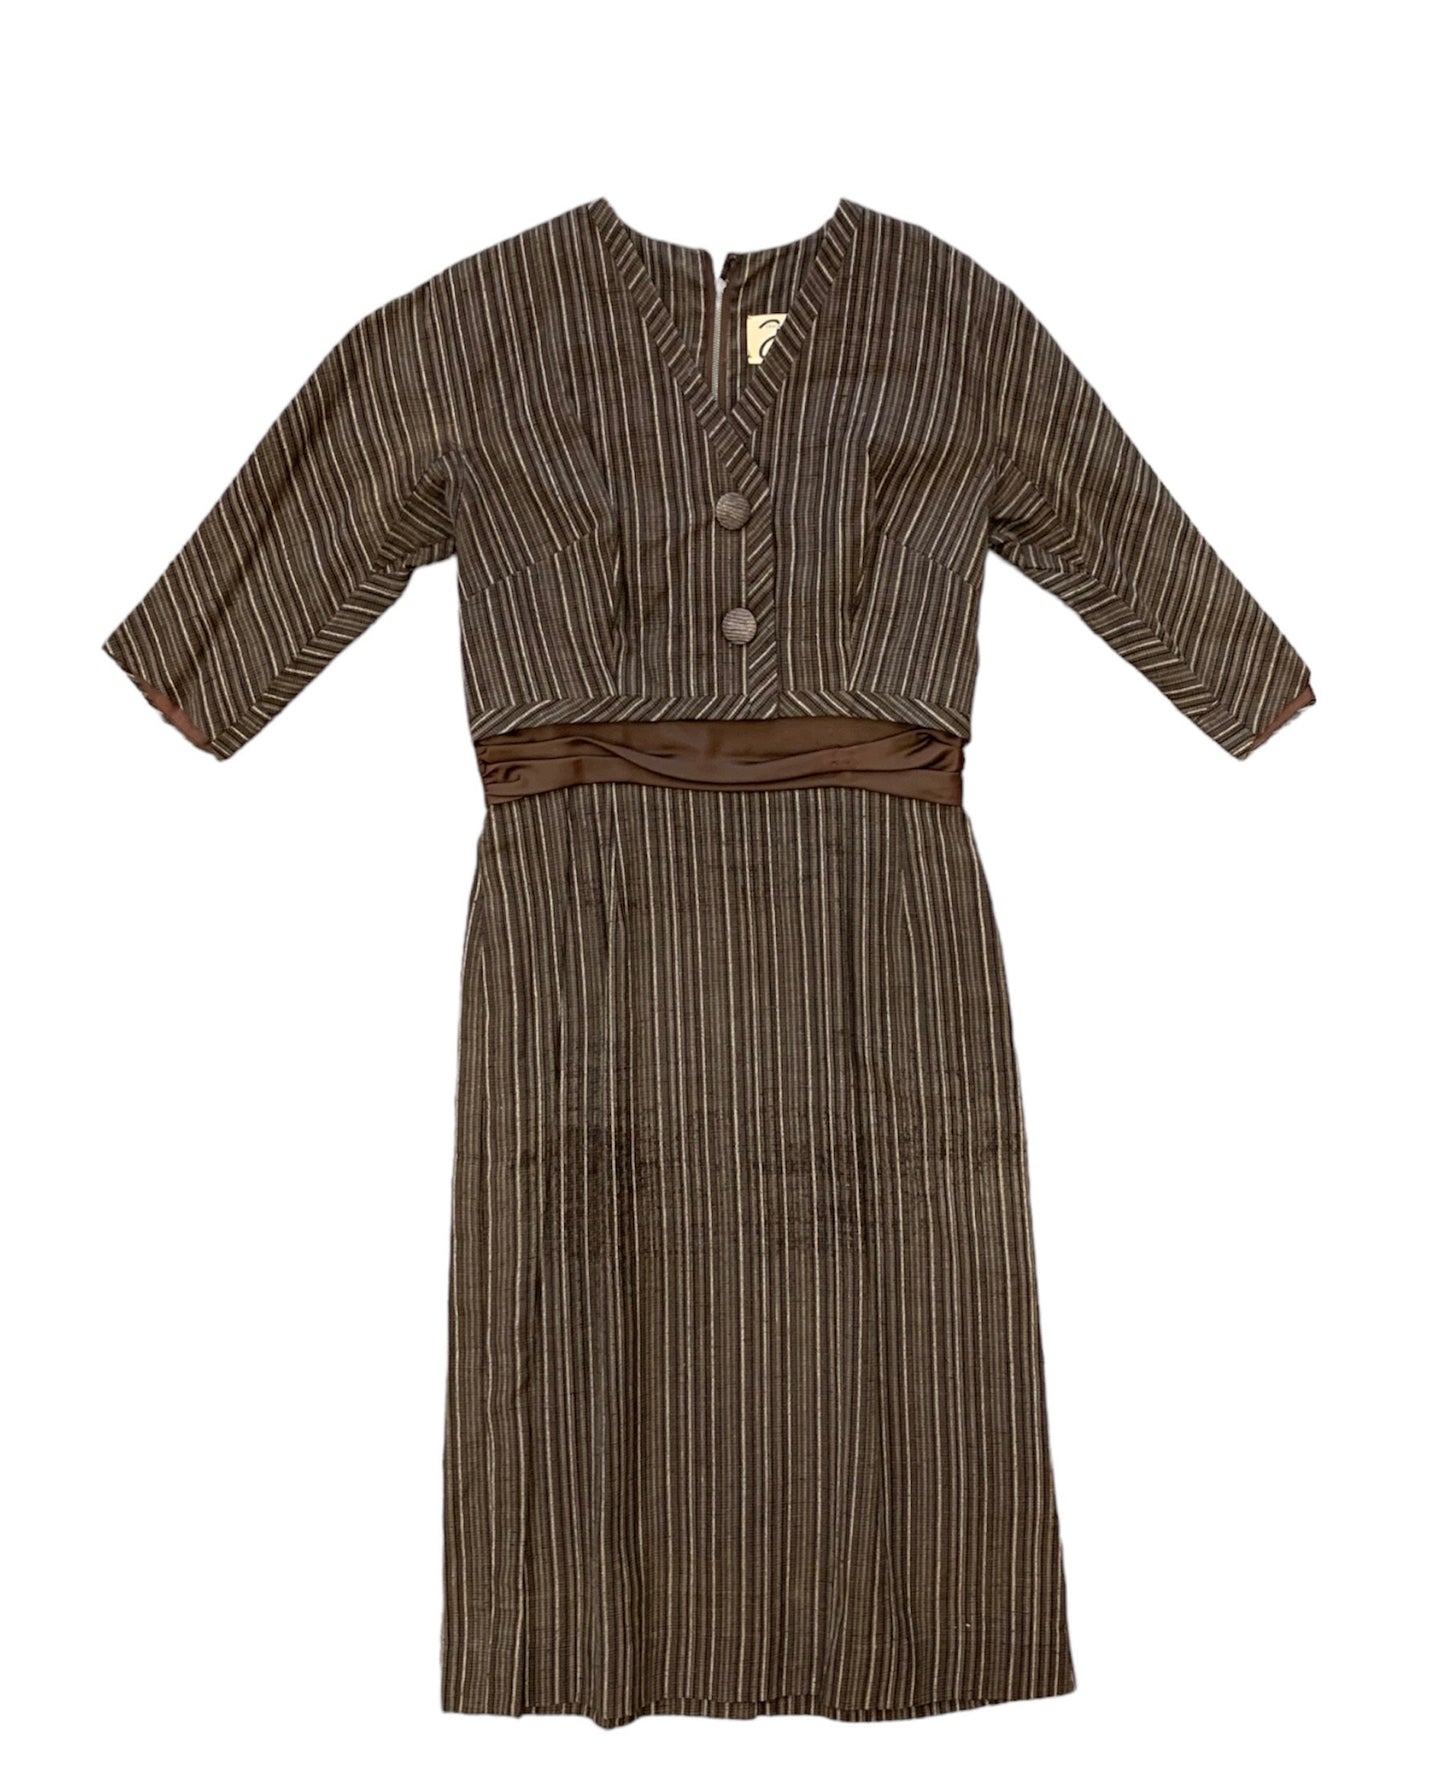 1940’s-1950’s Pinstripe Dress by Franklin